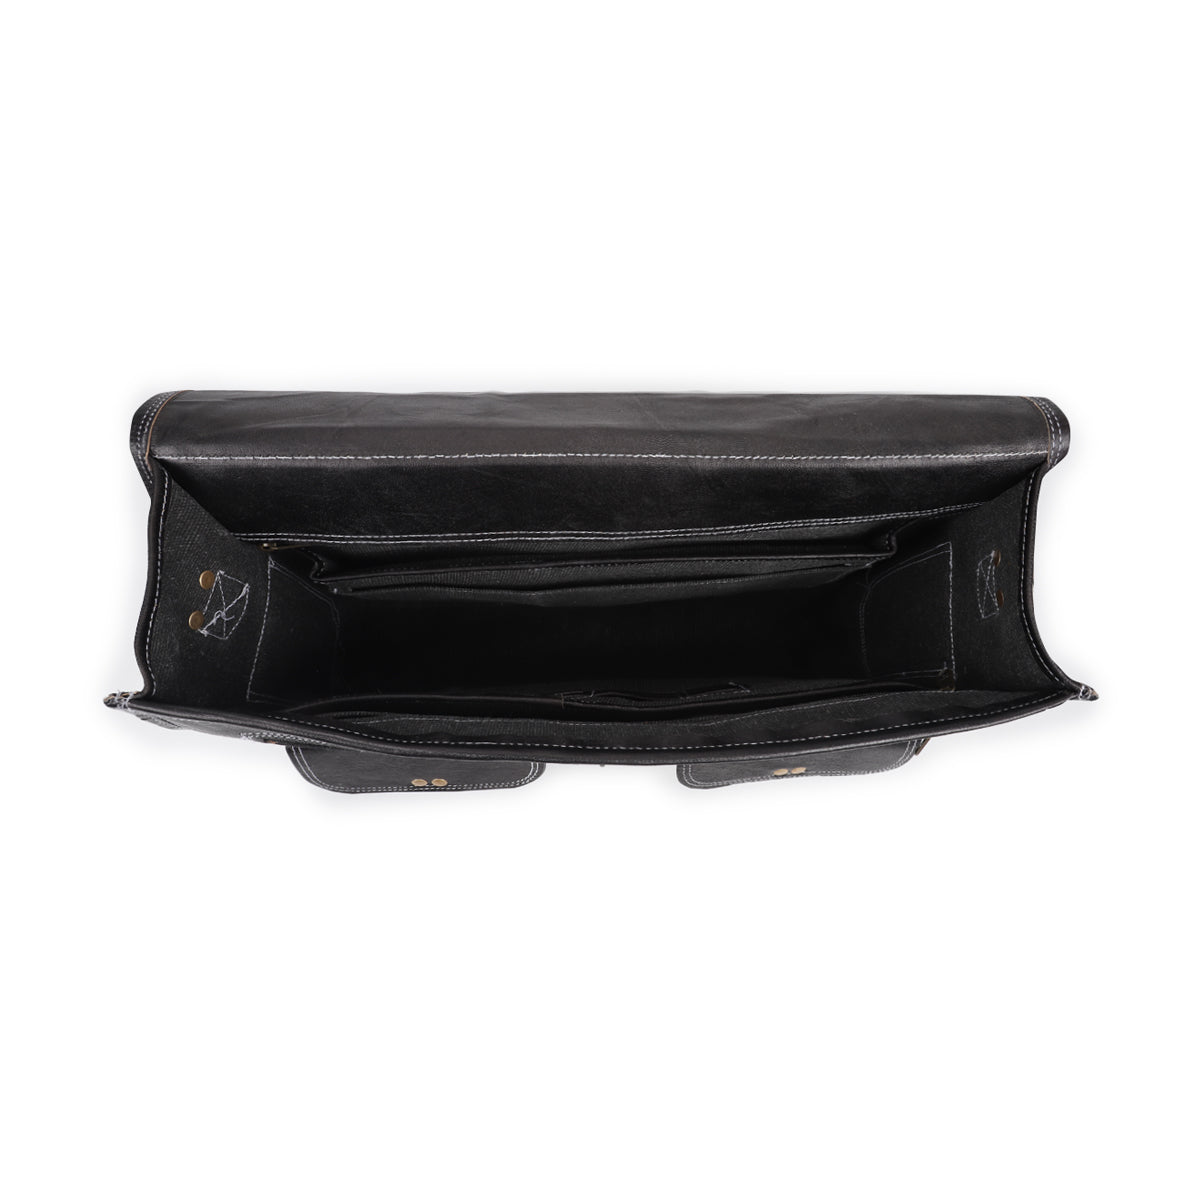 Black Leather Laptop Briefcase